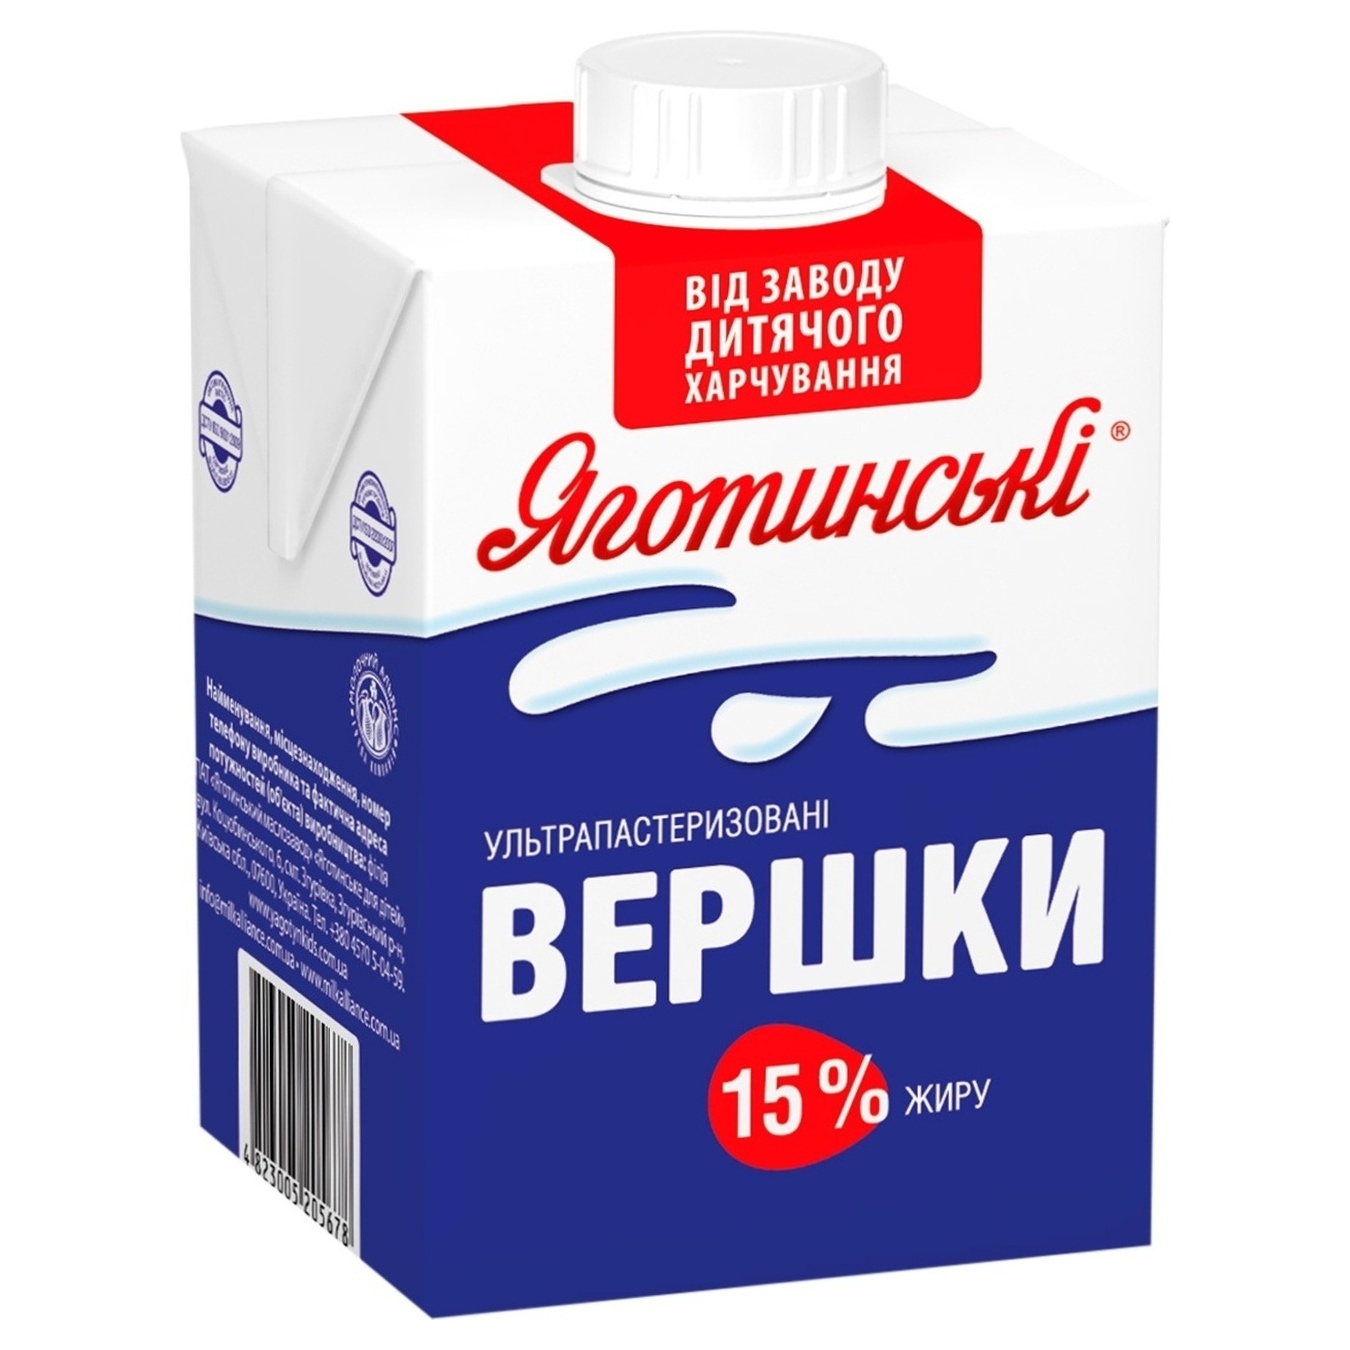 Yagotynski cream 15% tetra pack 500g